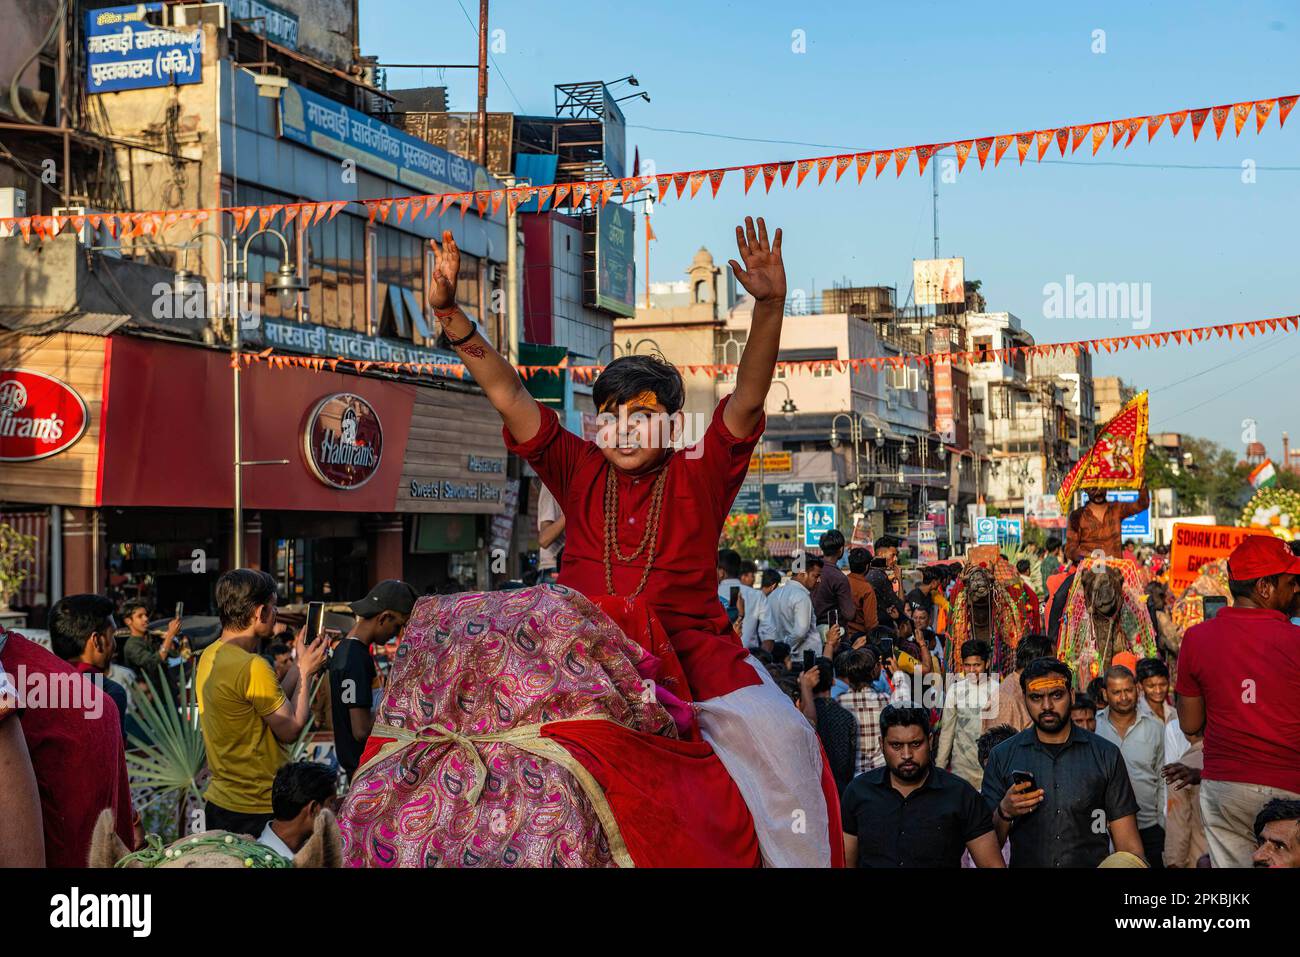 A Hindu devotee chants hanuman during a procession for the Hindu festival Hanuman Jayanti. The festival commemorates the birth of the Hindu deity Hanuman. Stock Photo